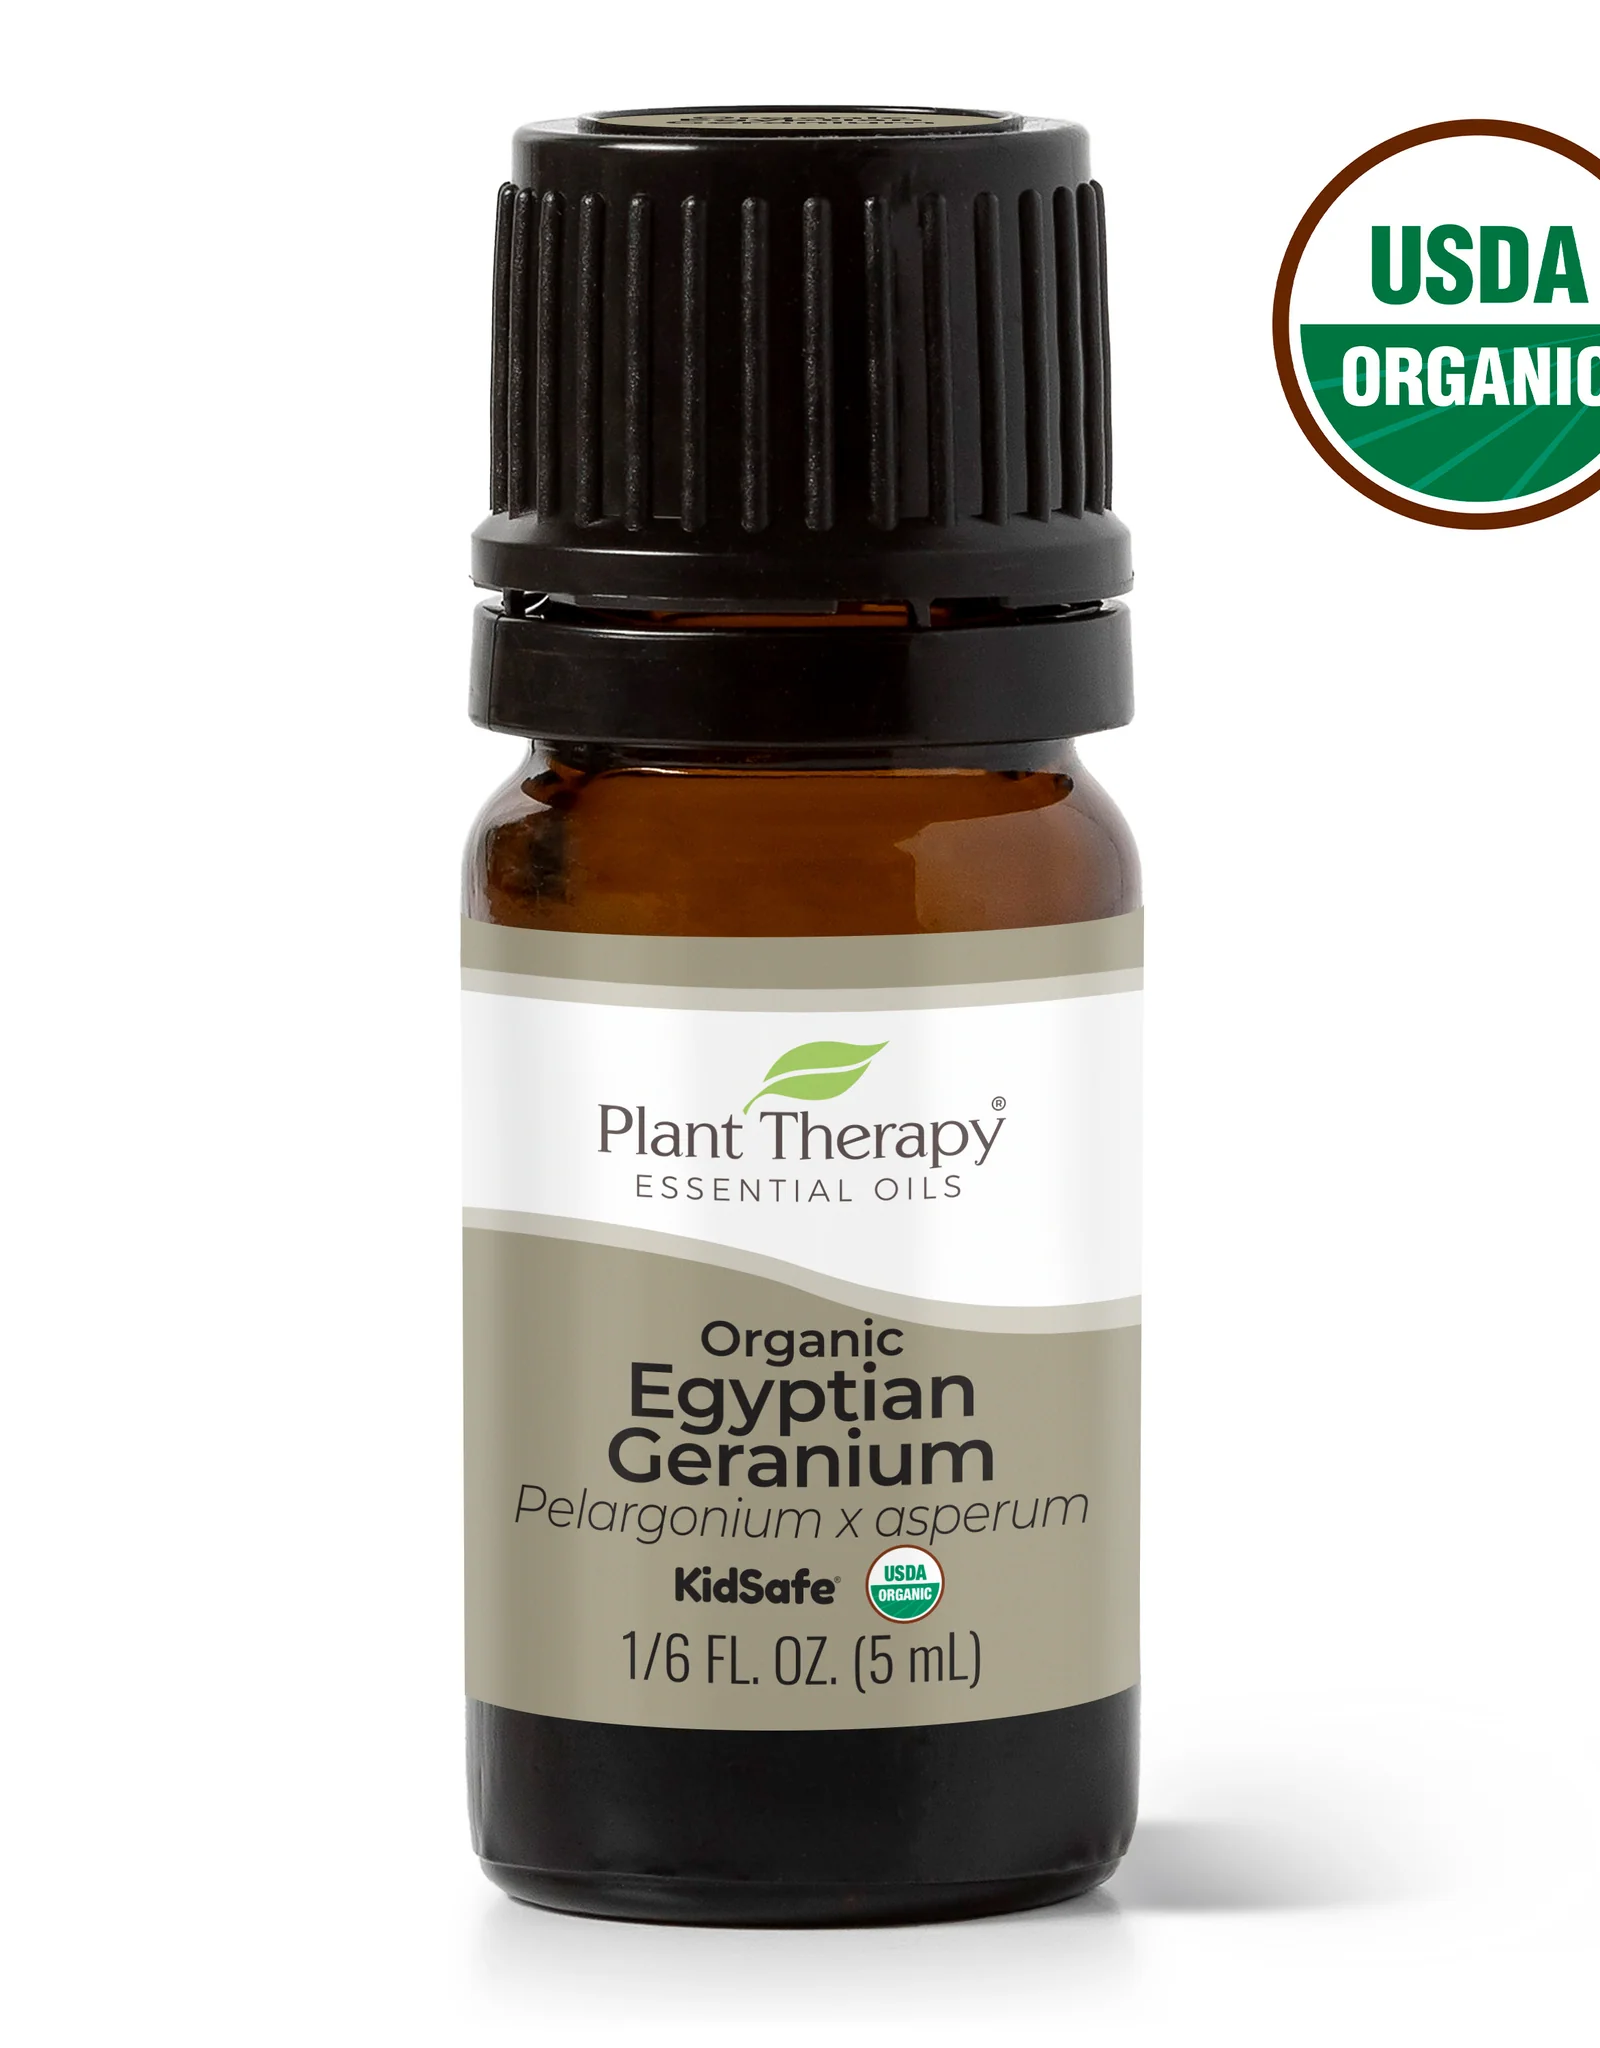 Plant Therapy Organic Egyptian Geranium Essential Oil 5ml